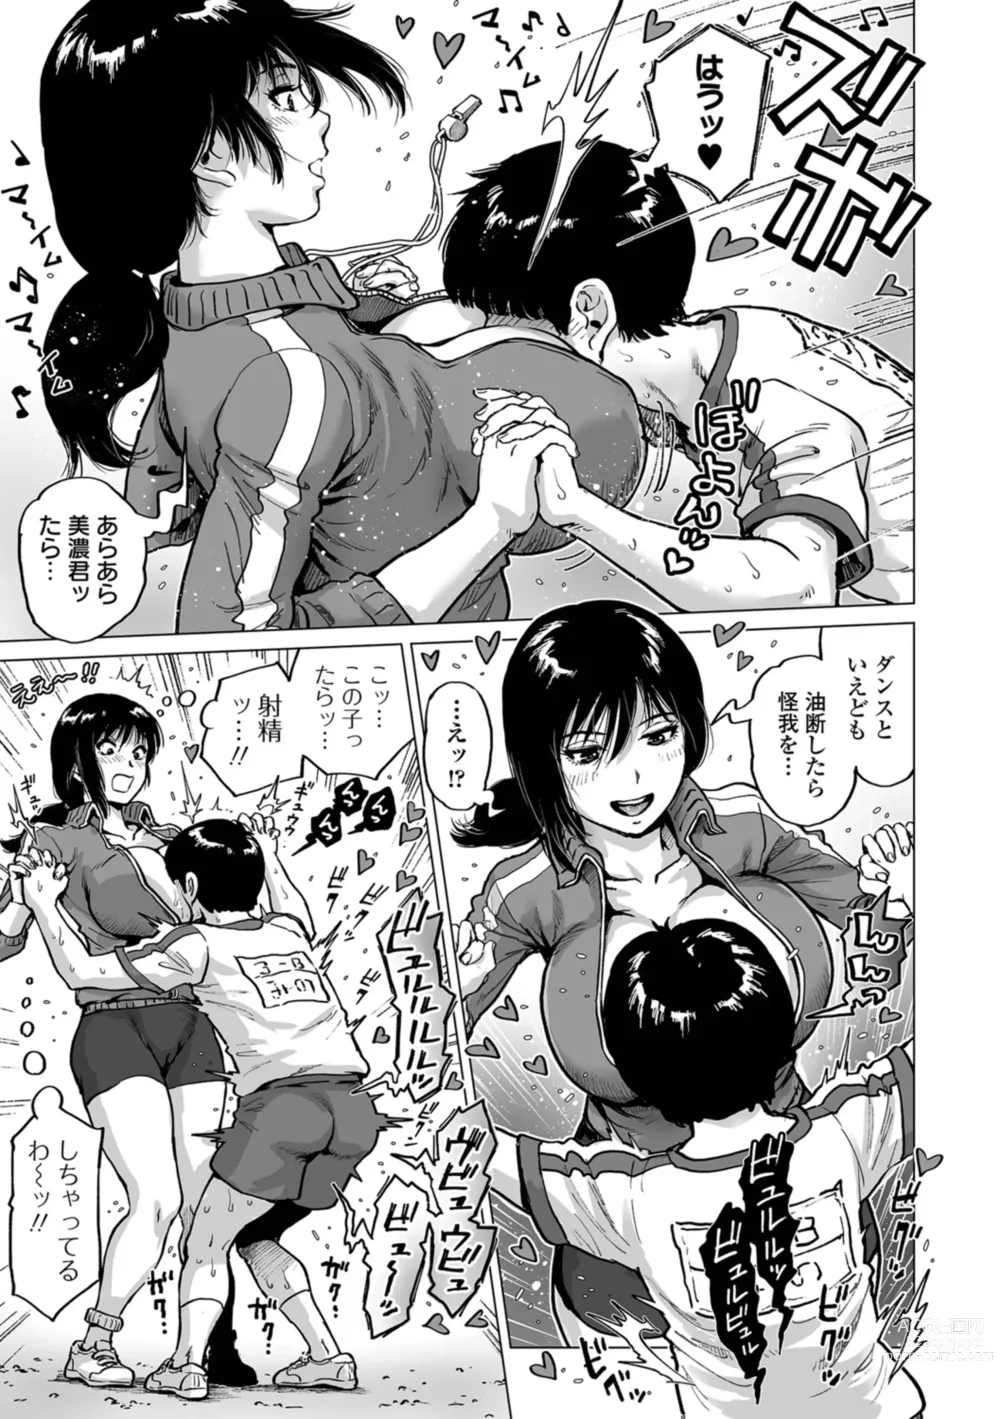 Page 7 of manga Harenchi Classmate